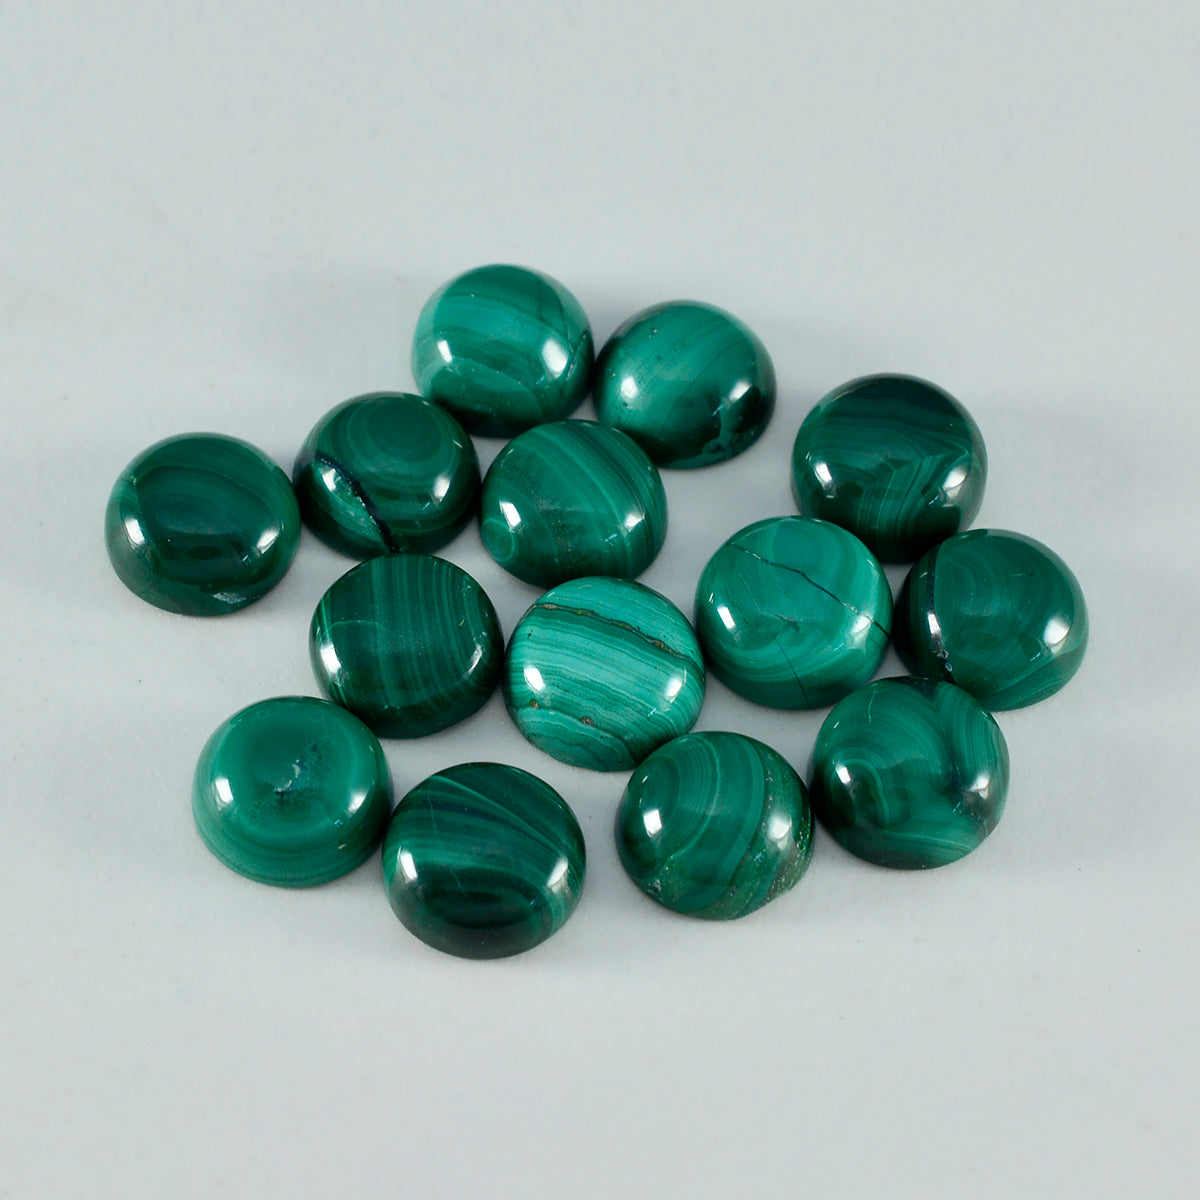 Riyogems 1PC groene malachiet cabochon 8x8 mm ronde vorm verbazingwekkende kwaliteit losse steen